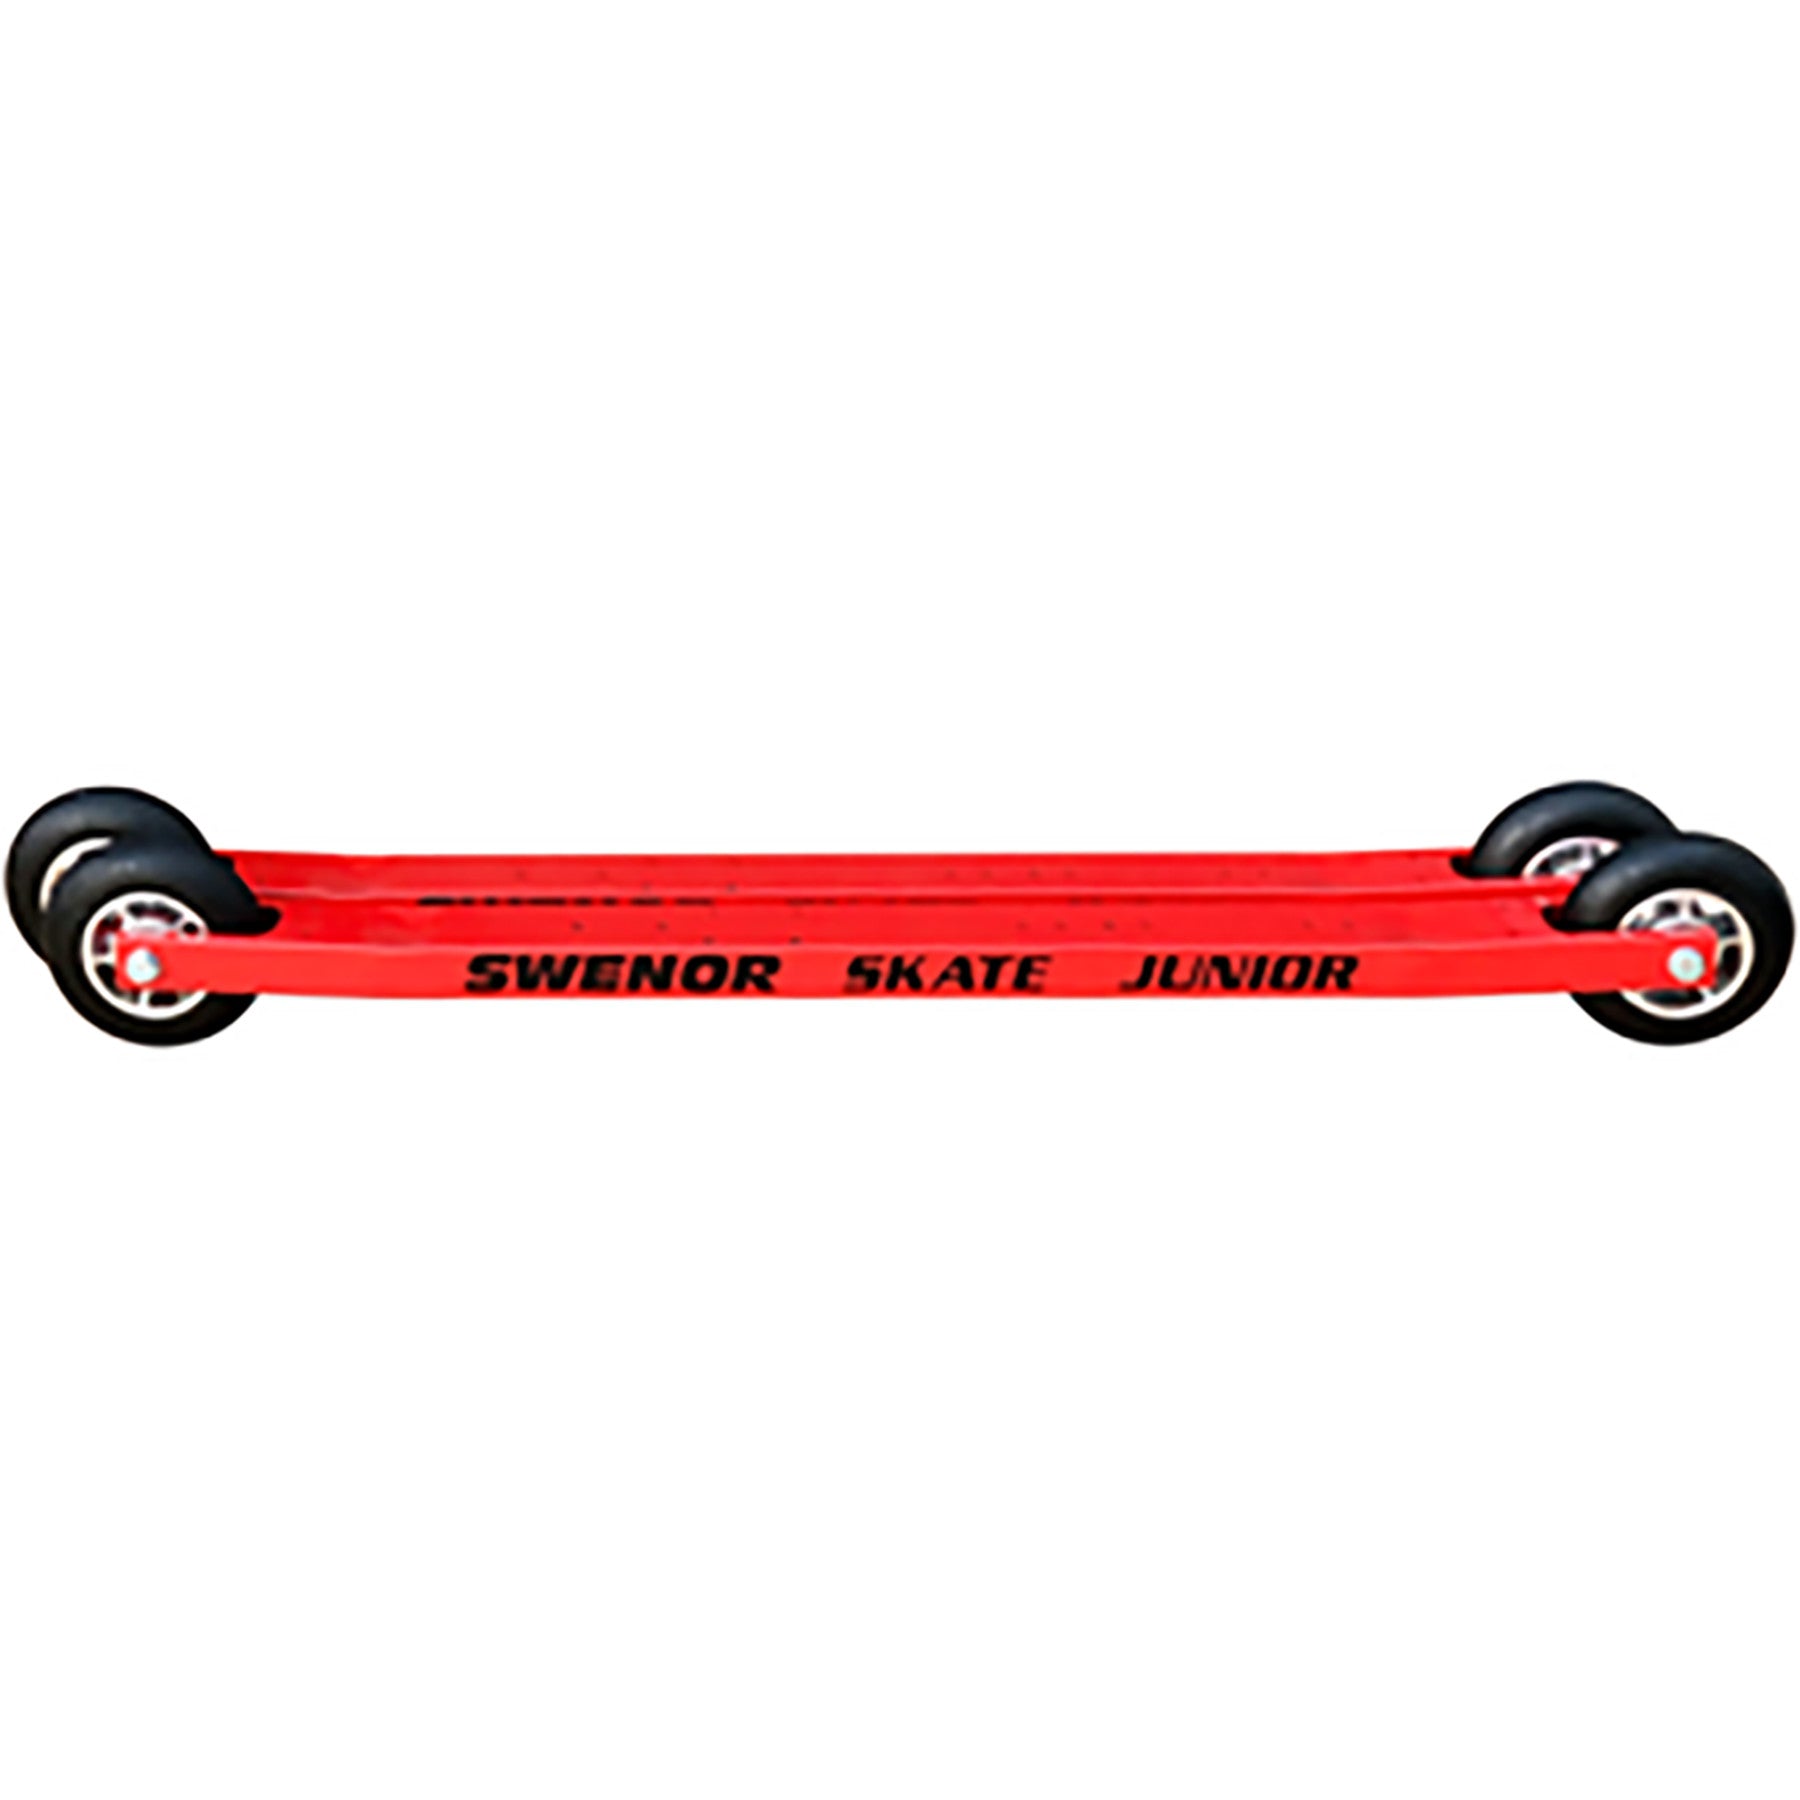 Swenor Rollerski Skate Junior 65-300